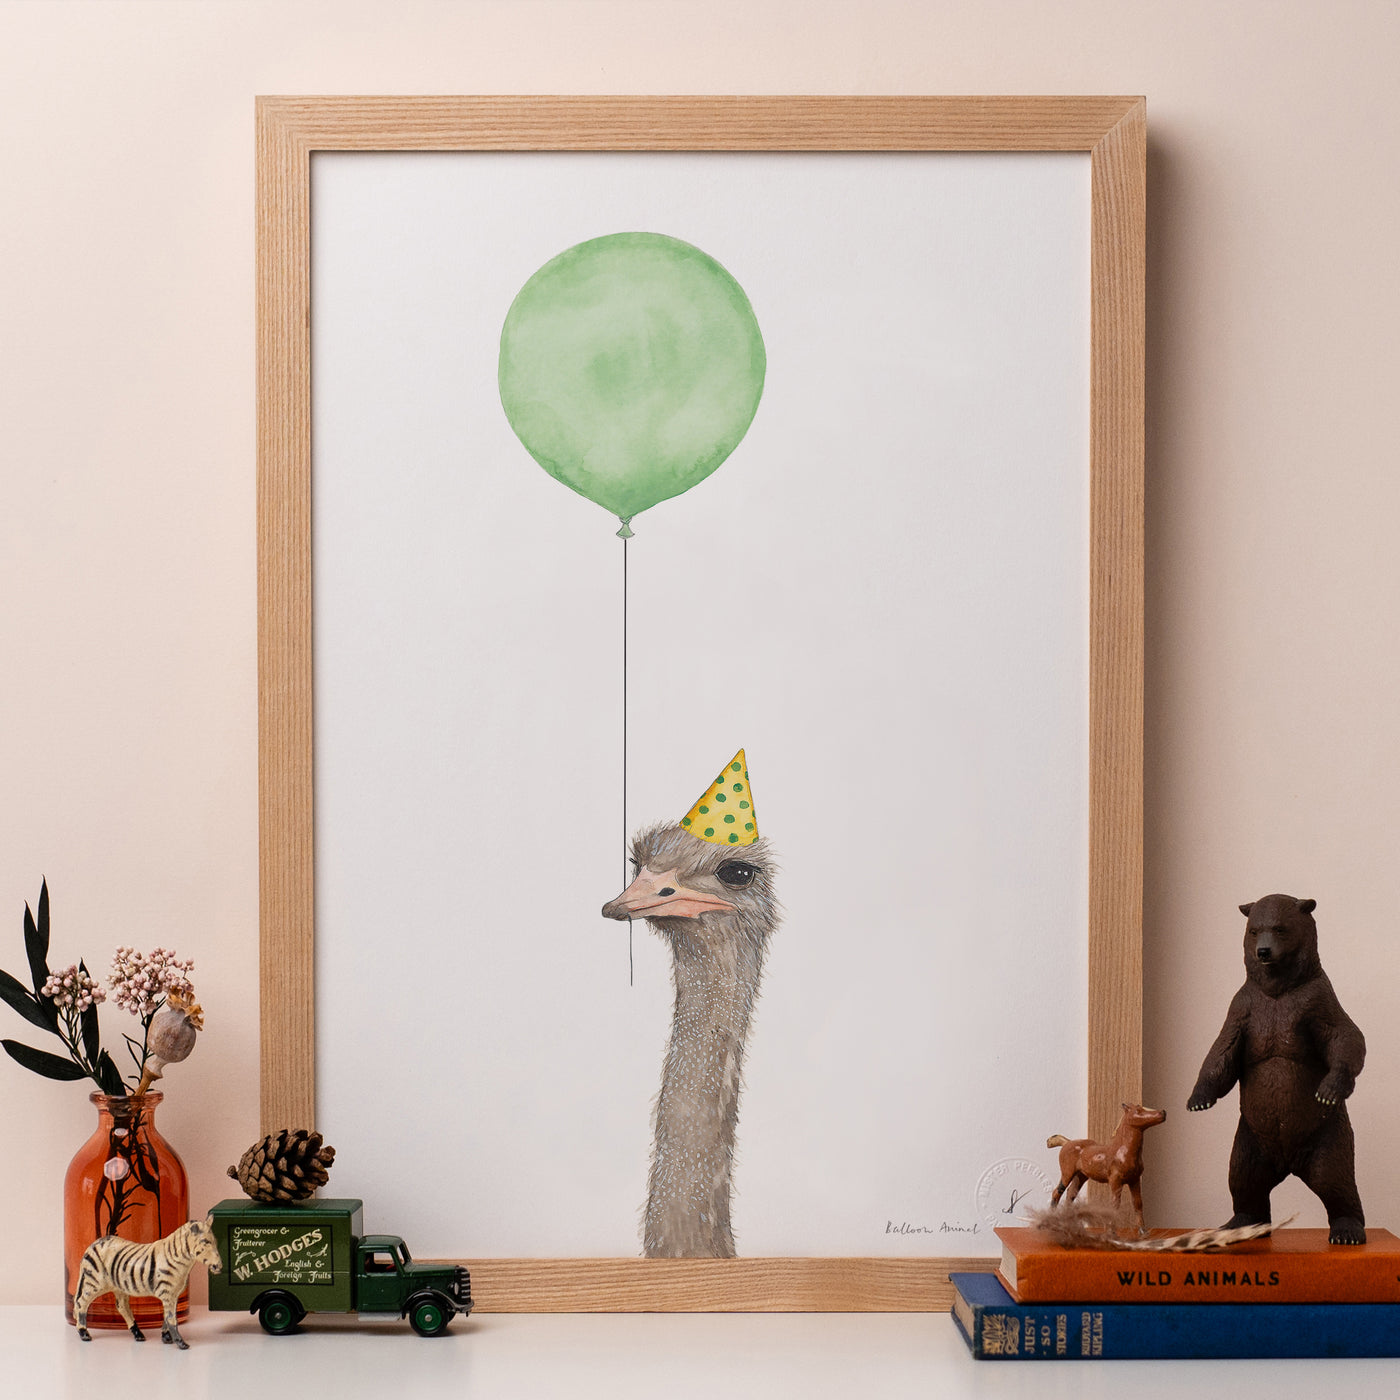 Balloon Animal Print - Ostrich